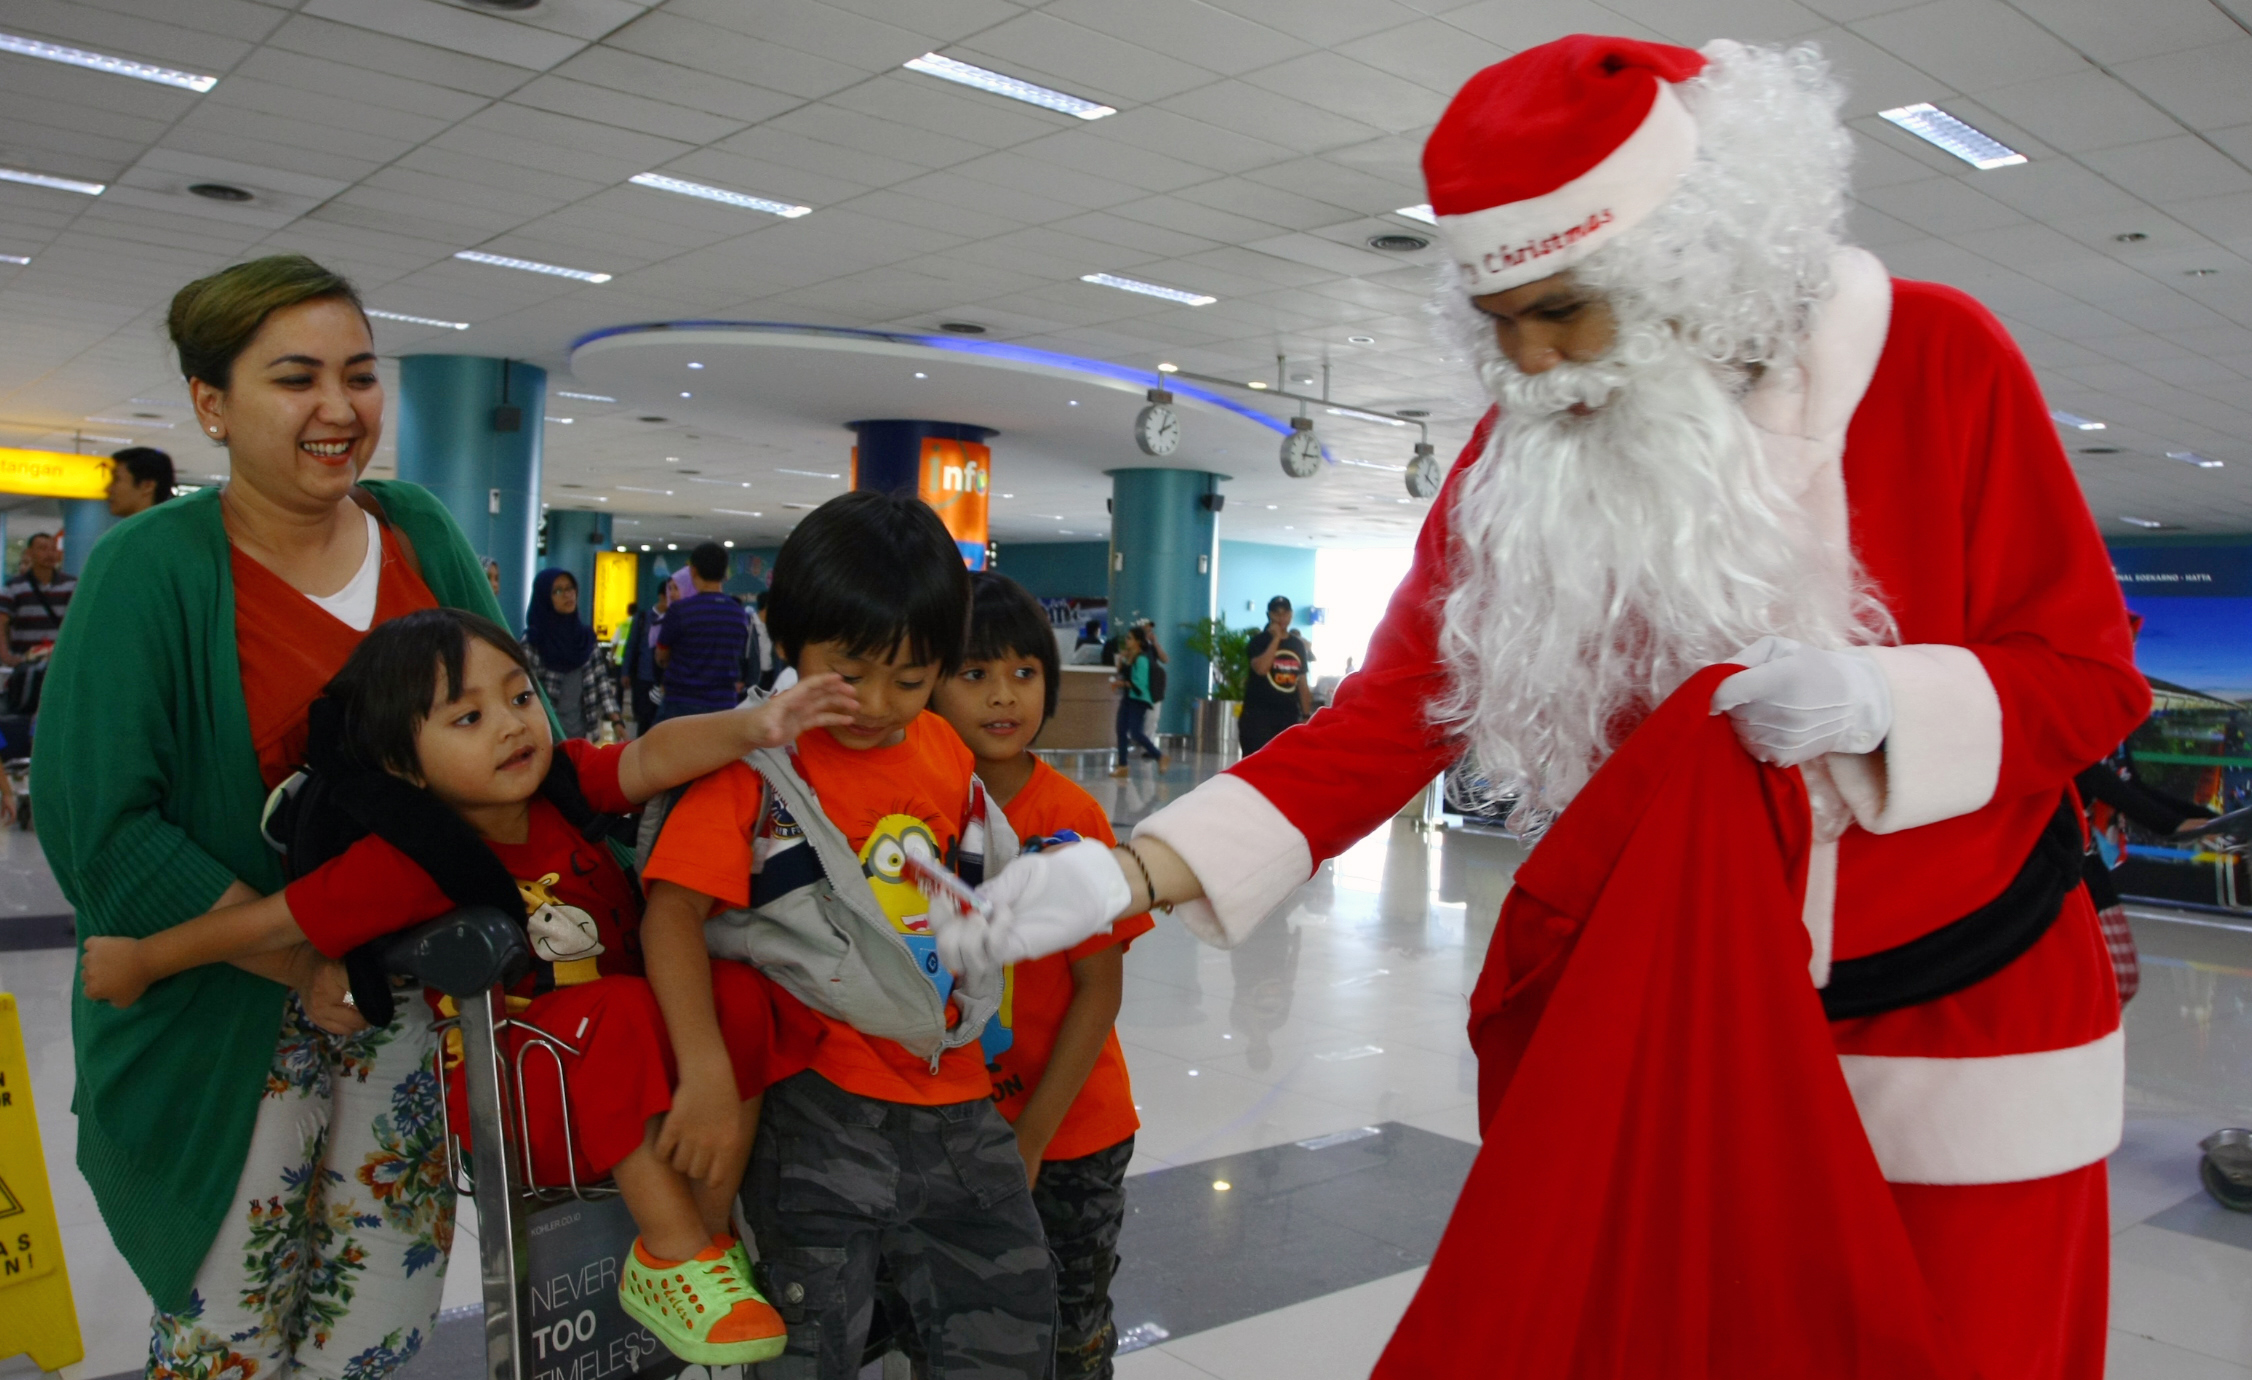 Sinterklas membagikan coklat kepada anak calon penumpang pesawat yang akan berangkat di Terminal 3 Bandara Soekarno-Hatta, Tangerang, Banten, pada 22 Desember 2015. Foto oleh Muhammad Iqbal/Antara 